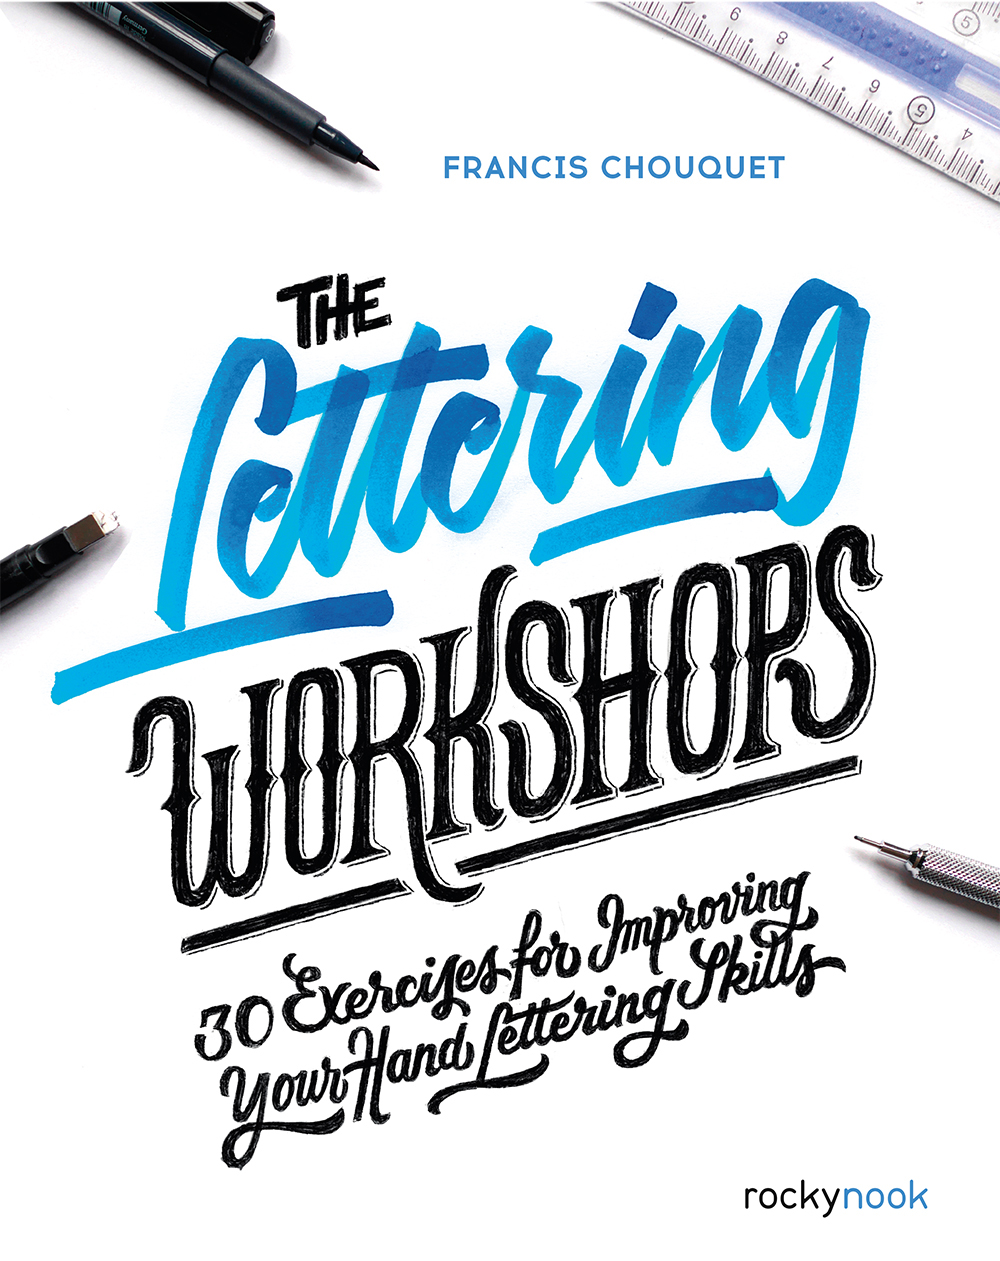 THE LETTERING WORKSHOPS 30 Exercises for Improving Your Hand Lettering Skills - photo 1